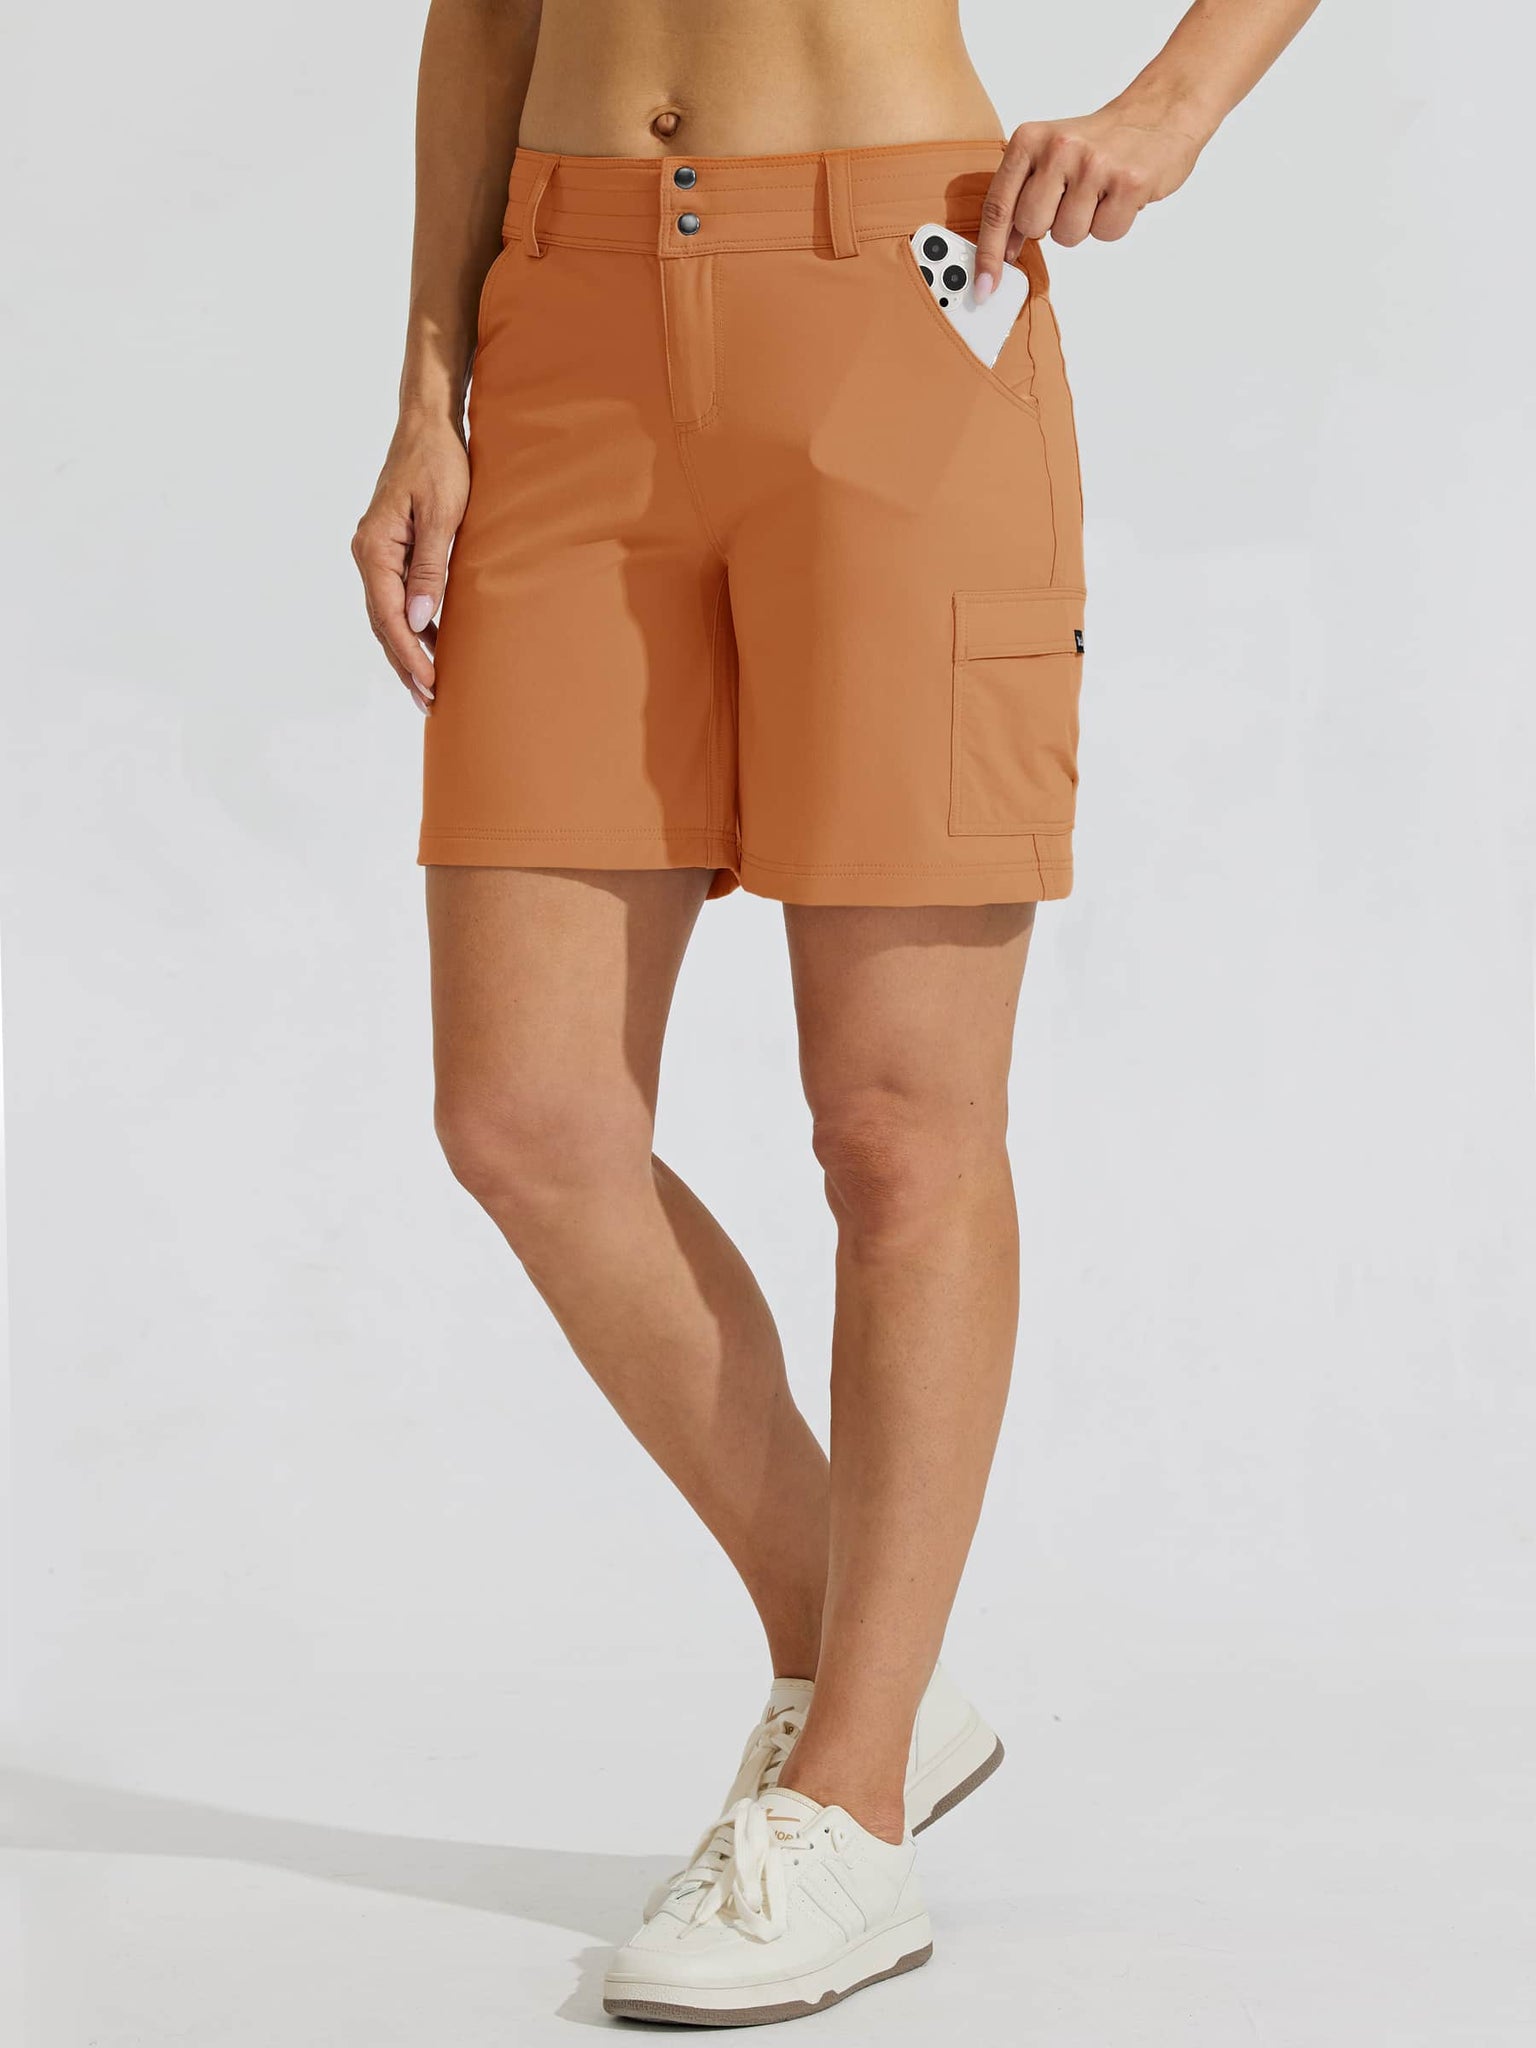 Women's Outdoor Pro Shorts Copper_model3